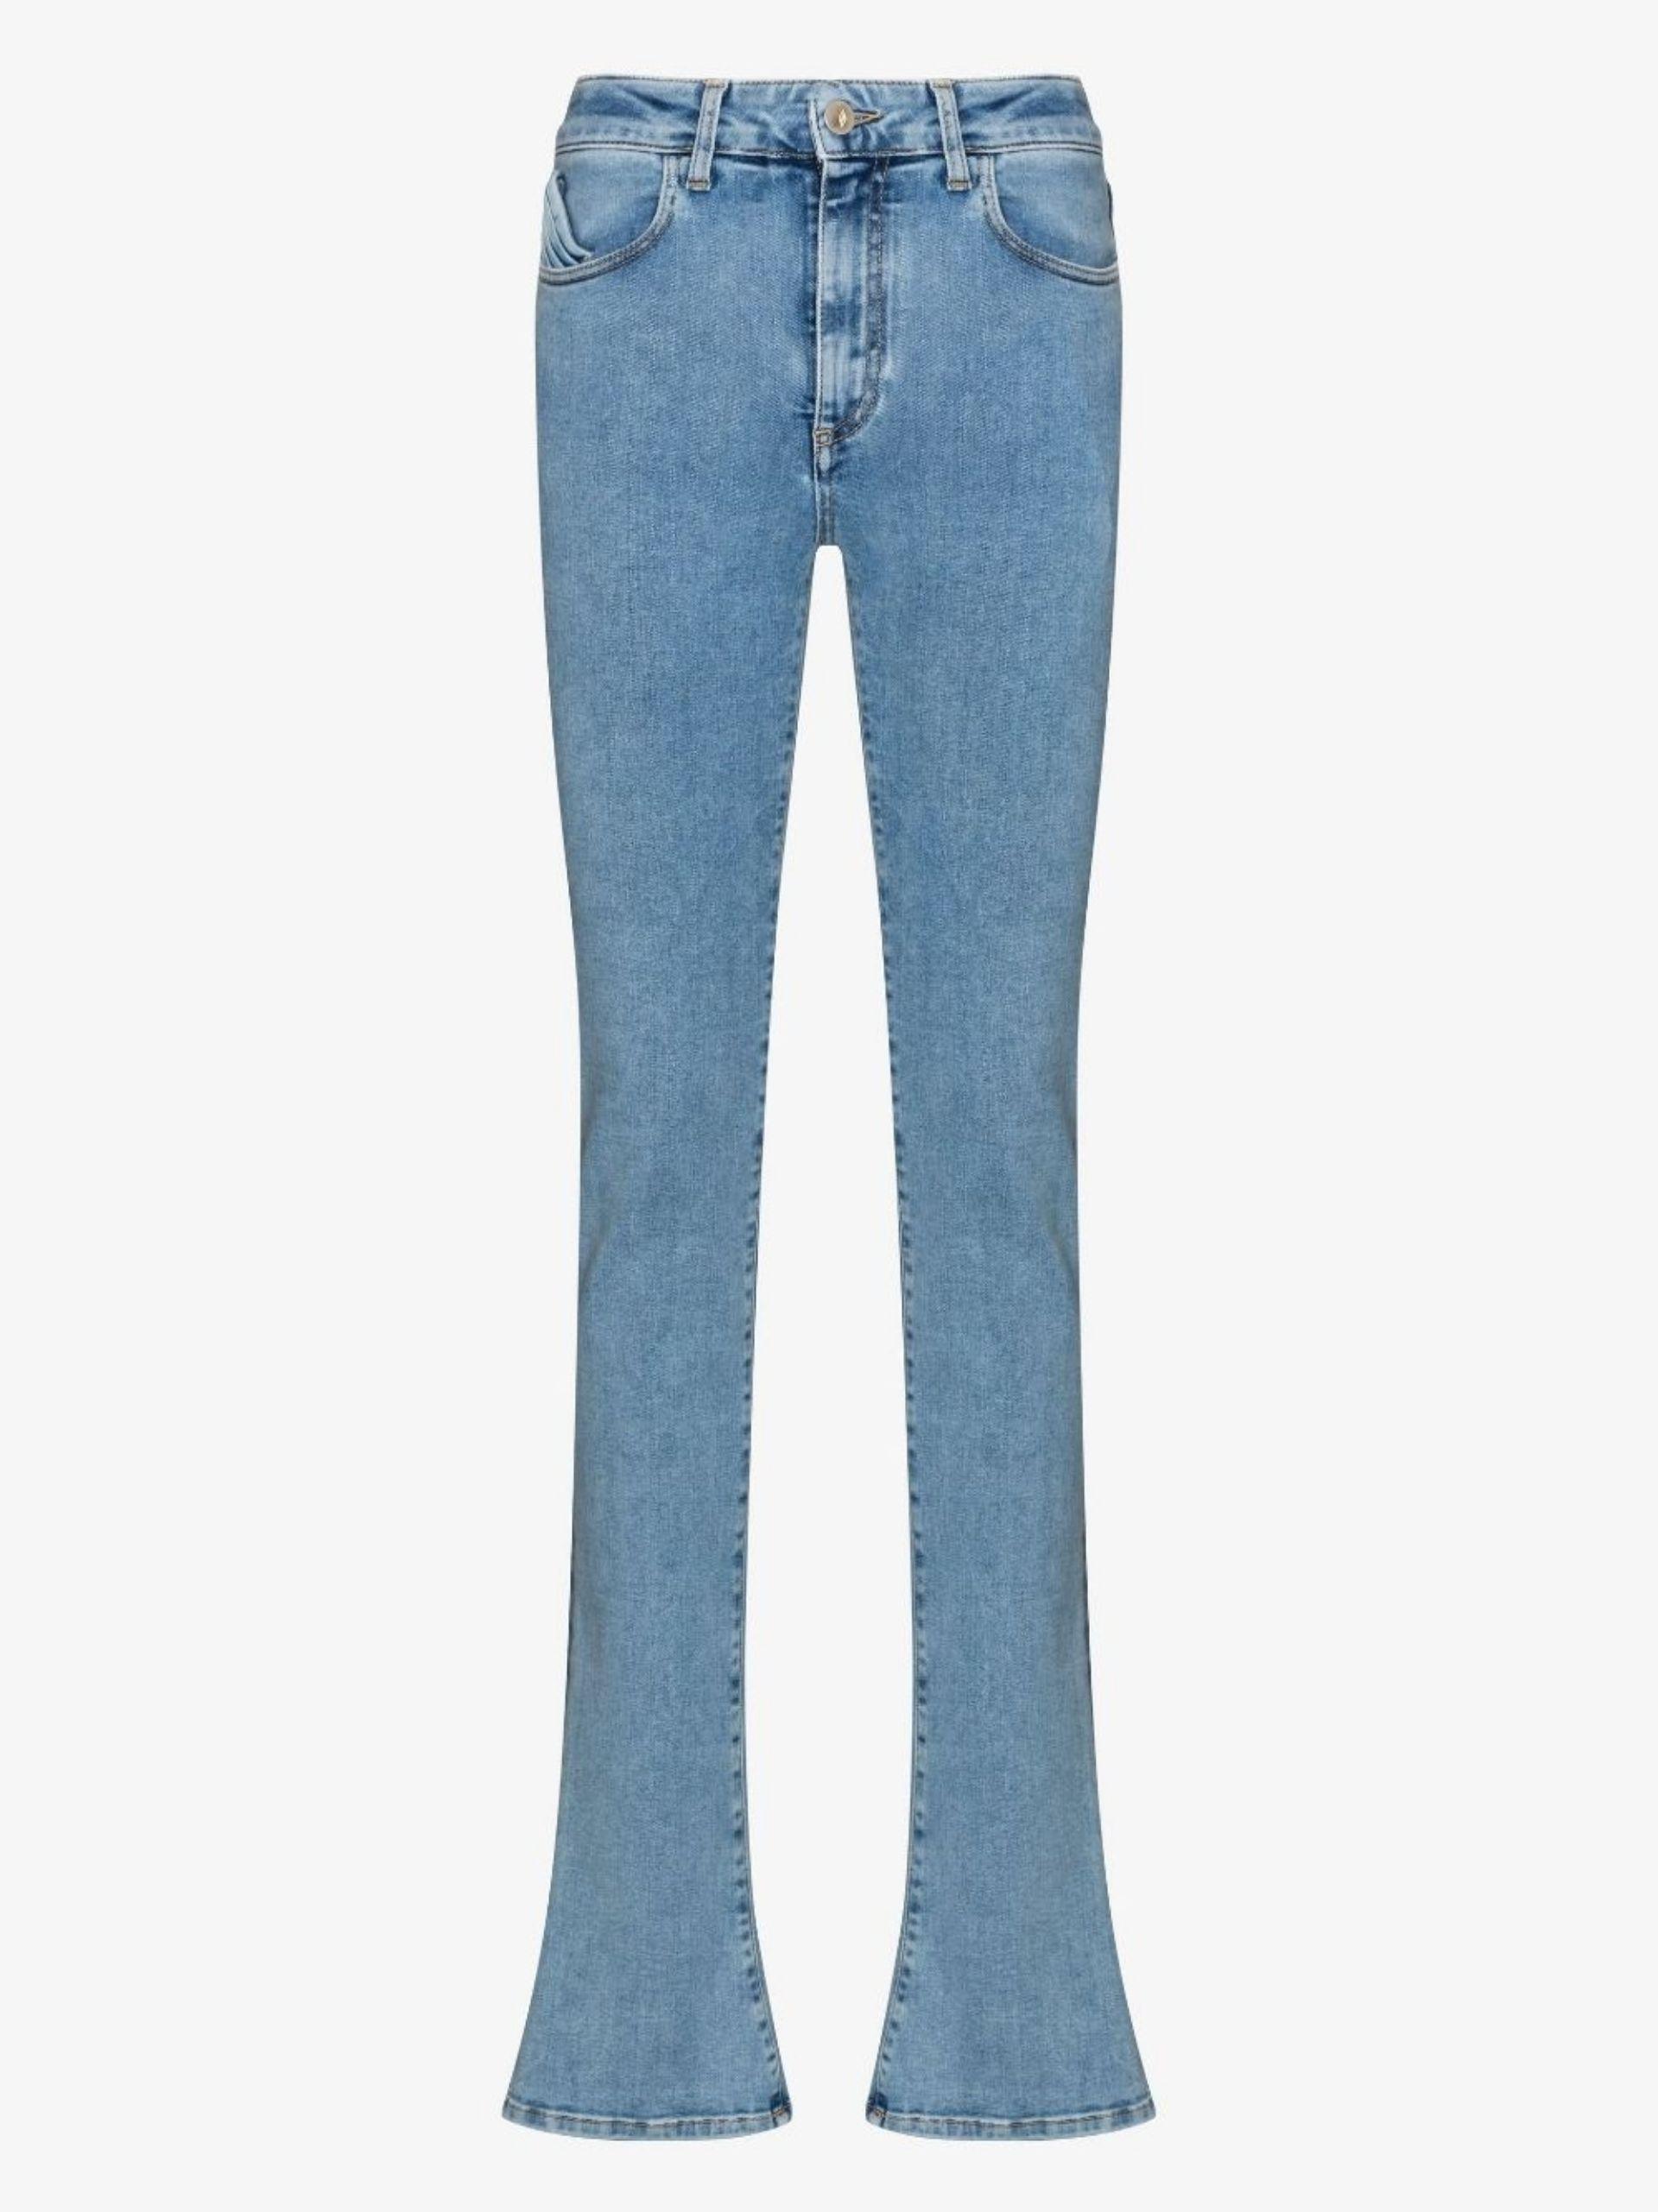 Damen Bekleidung Jeans Schlagjeans The Attico Denim High-Rise Flared Jeans Dione in Blau 